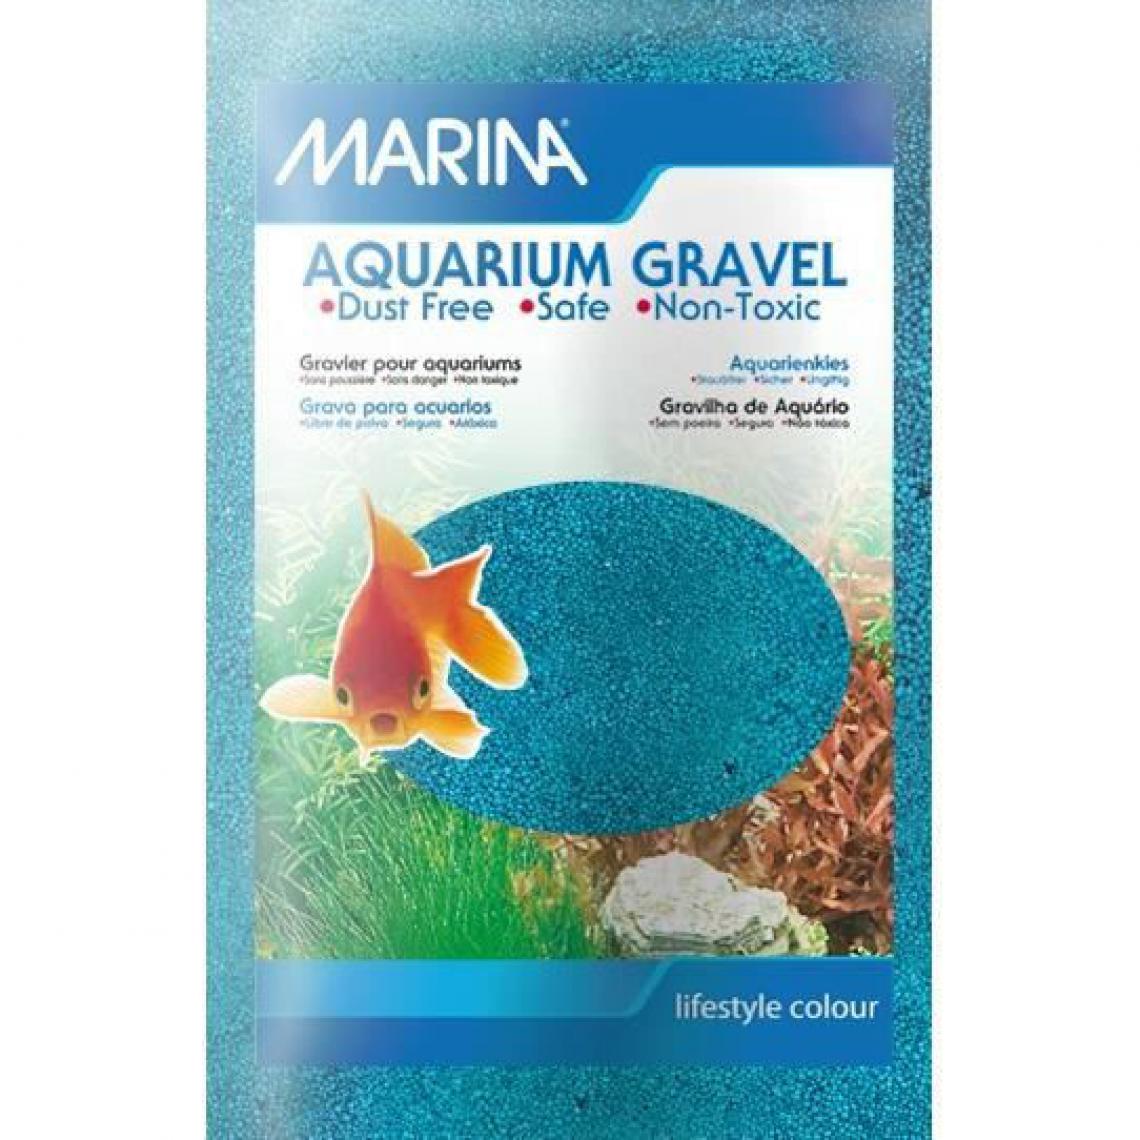 Icaverne - PERLE - BILLE DE VERRE - GRAVIER - ROCHER - PIERRE POUR AQUARIUM - TERRARIUM - VIVARIUM Sable microbille - 1 kg - Bleu - Pour aquarium - Décoration aquarium